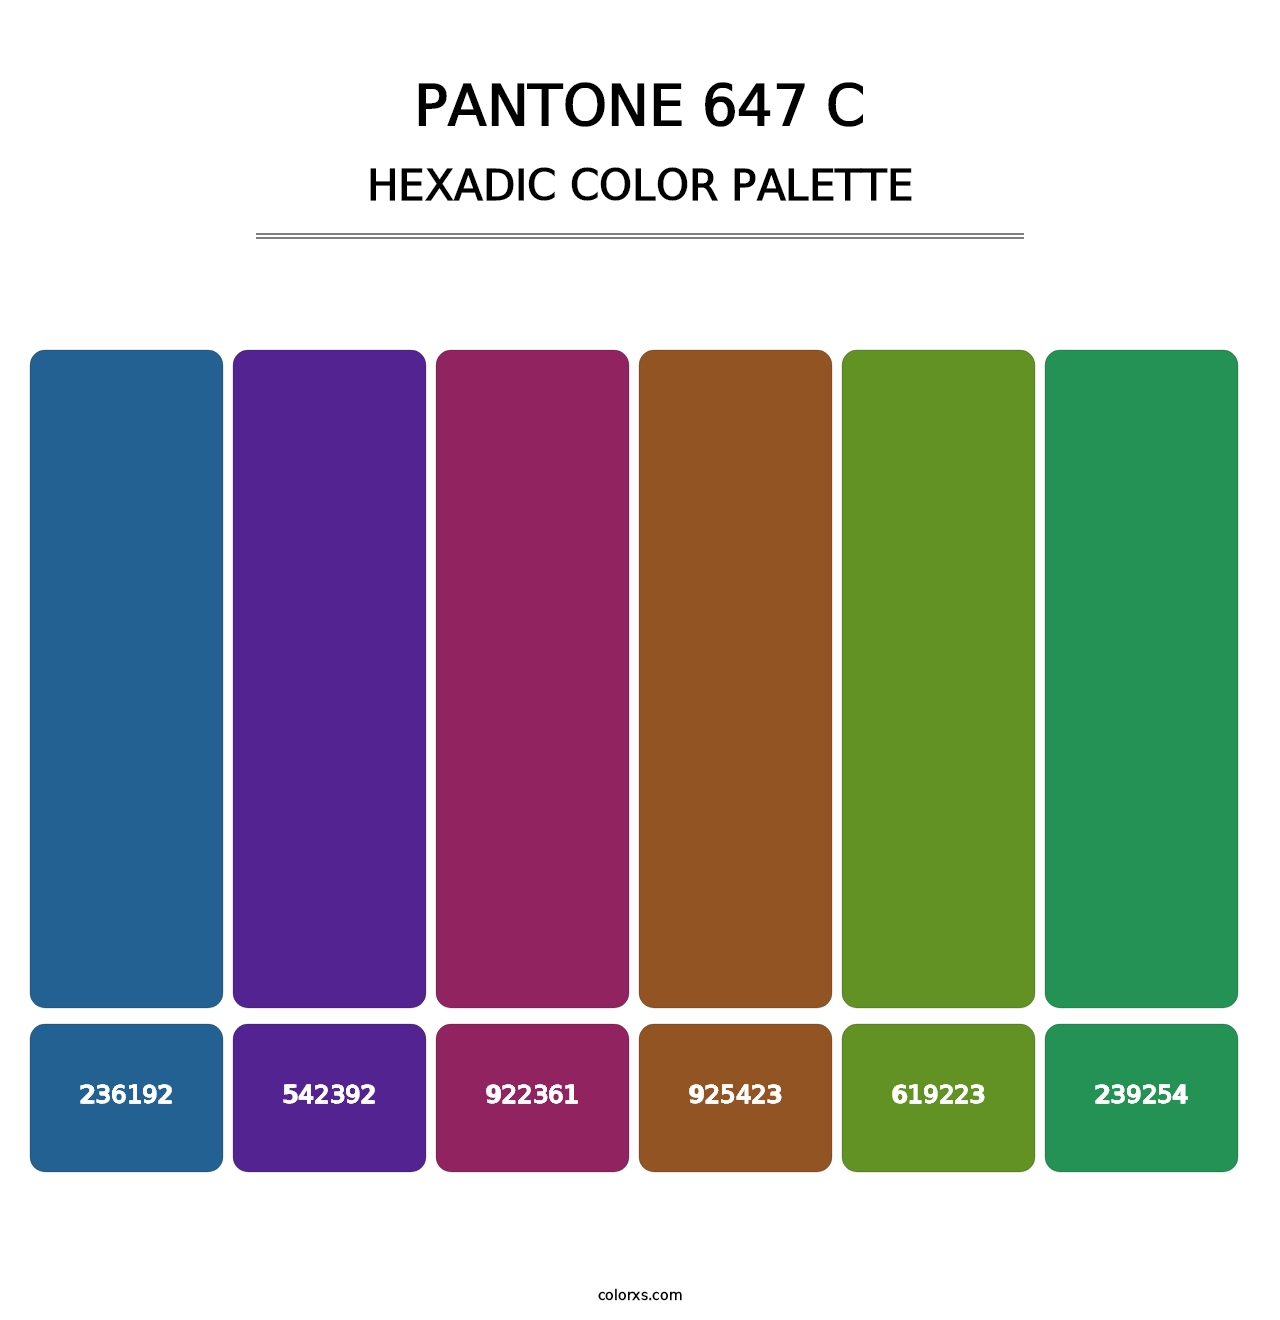 PANTONE 647 C - Hexadic Color Palette